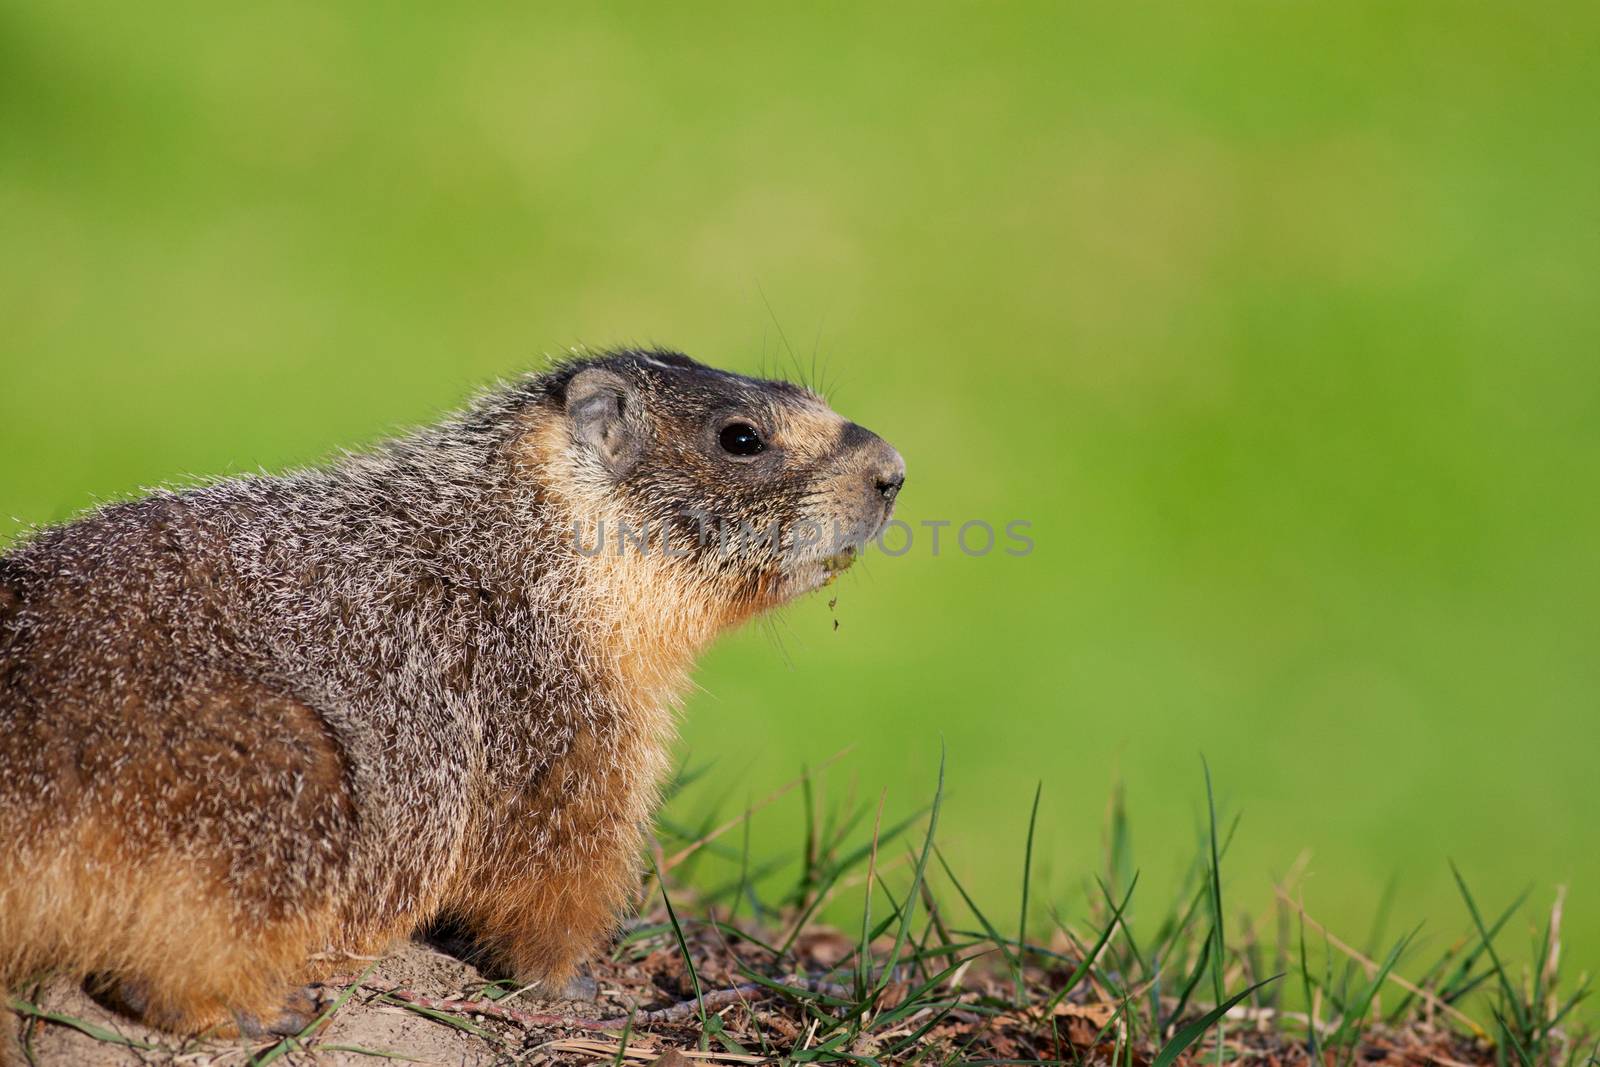 Yellow-Bellied Marmot Closeup by songbird839